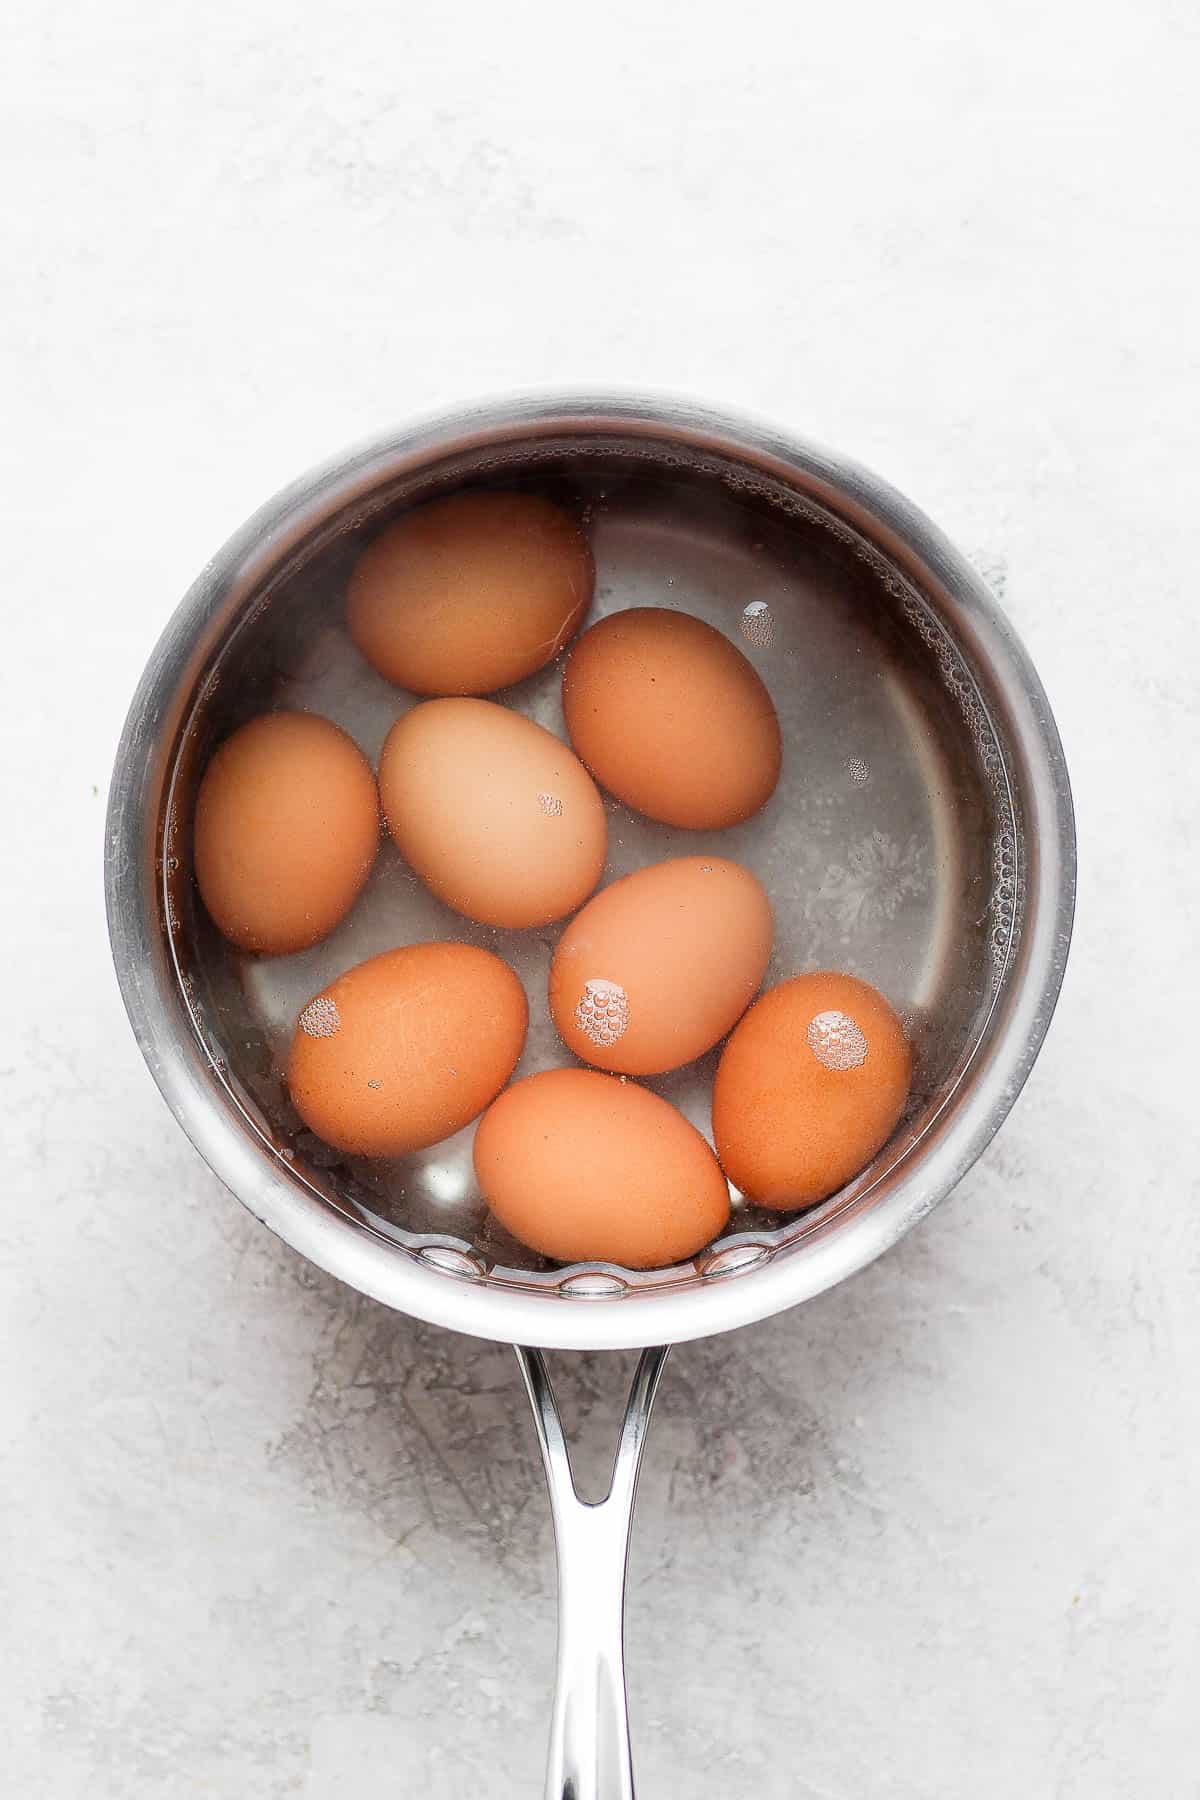 Eggs simmering in a saucepan.